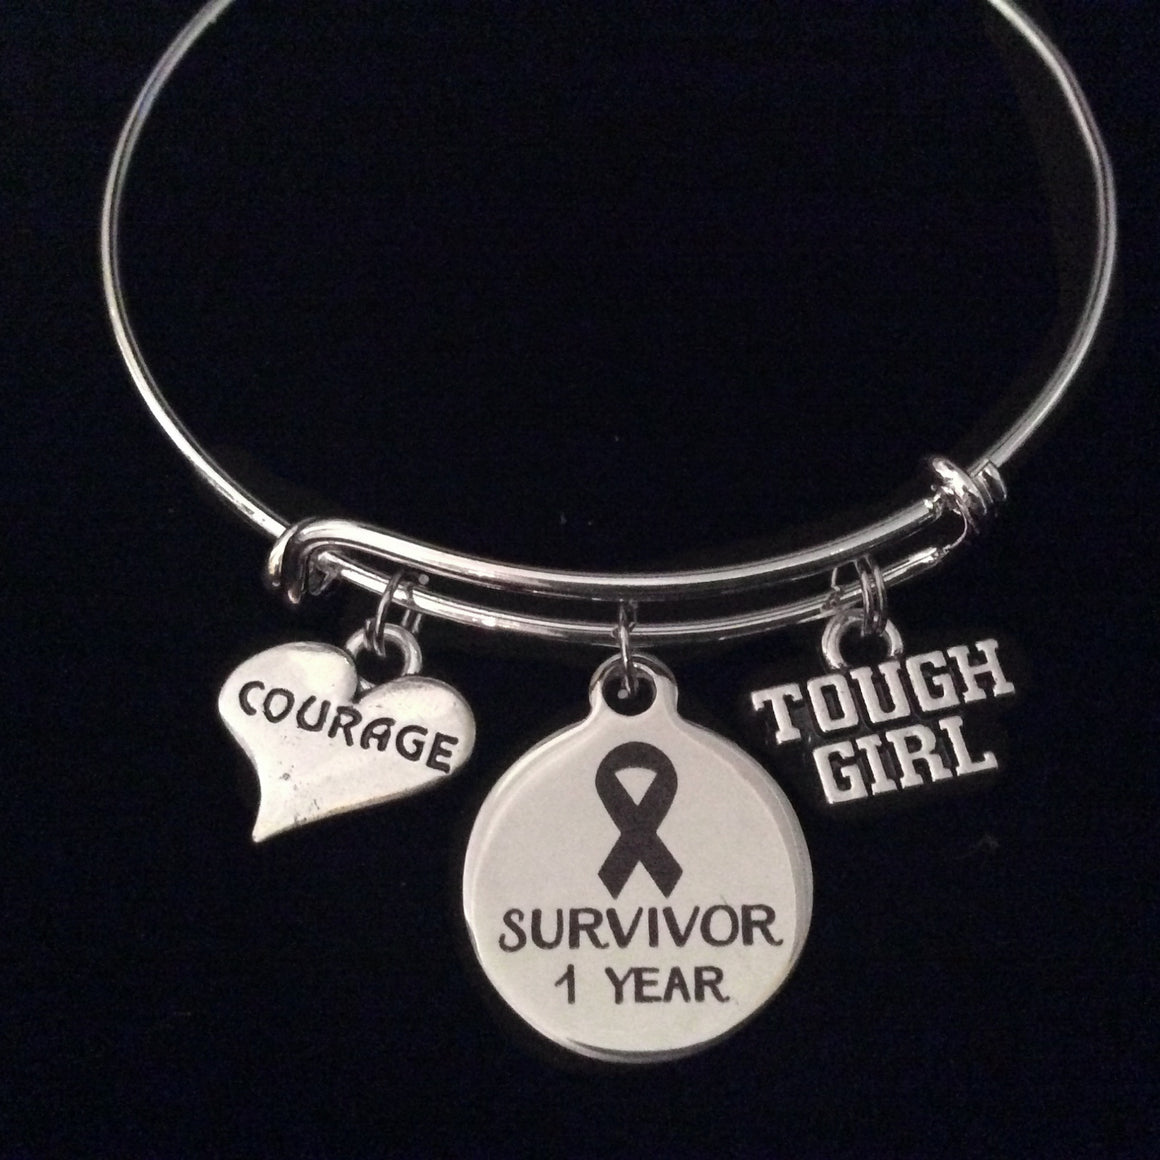 Cancer Survivor 1 Year Courage Tough Girl Expandable Silver Charm Bracelet Adjustable Bangle Gift